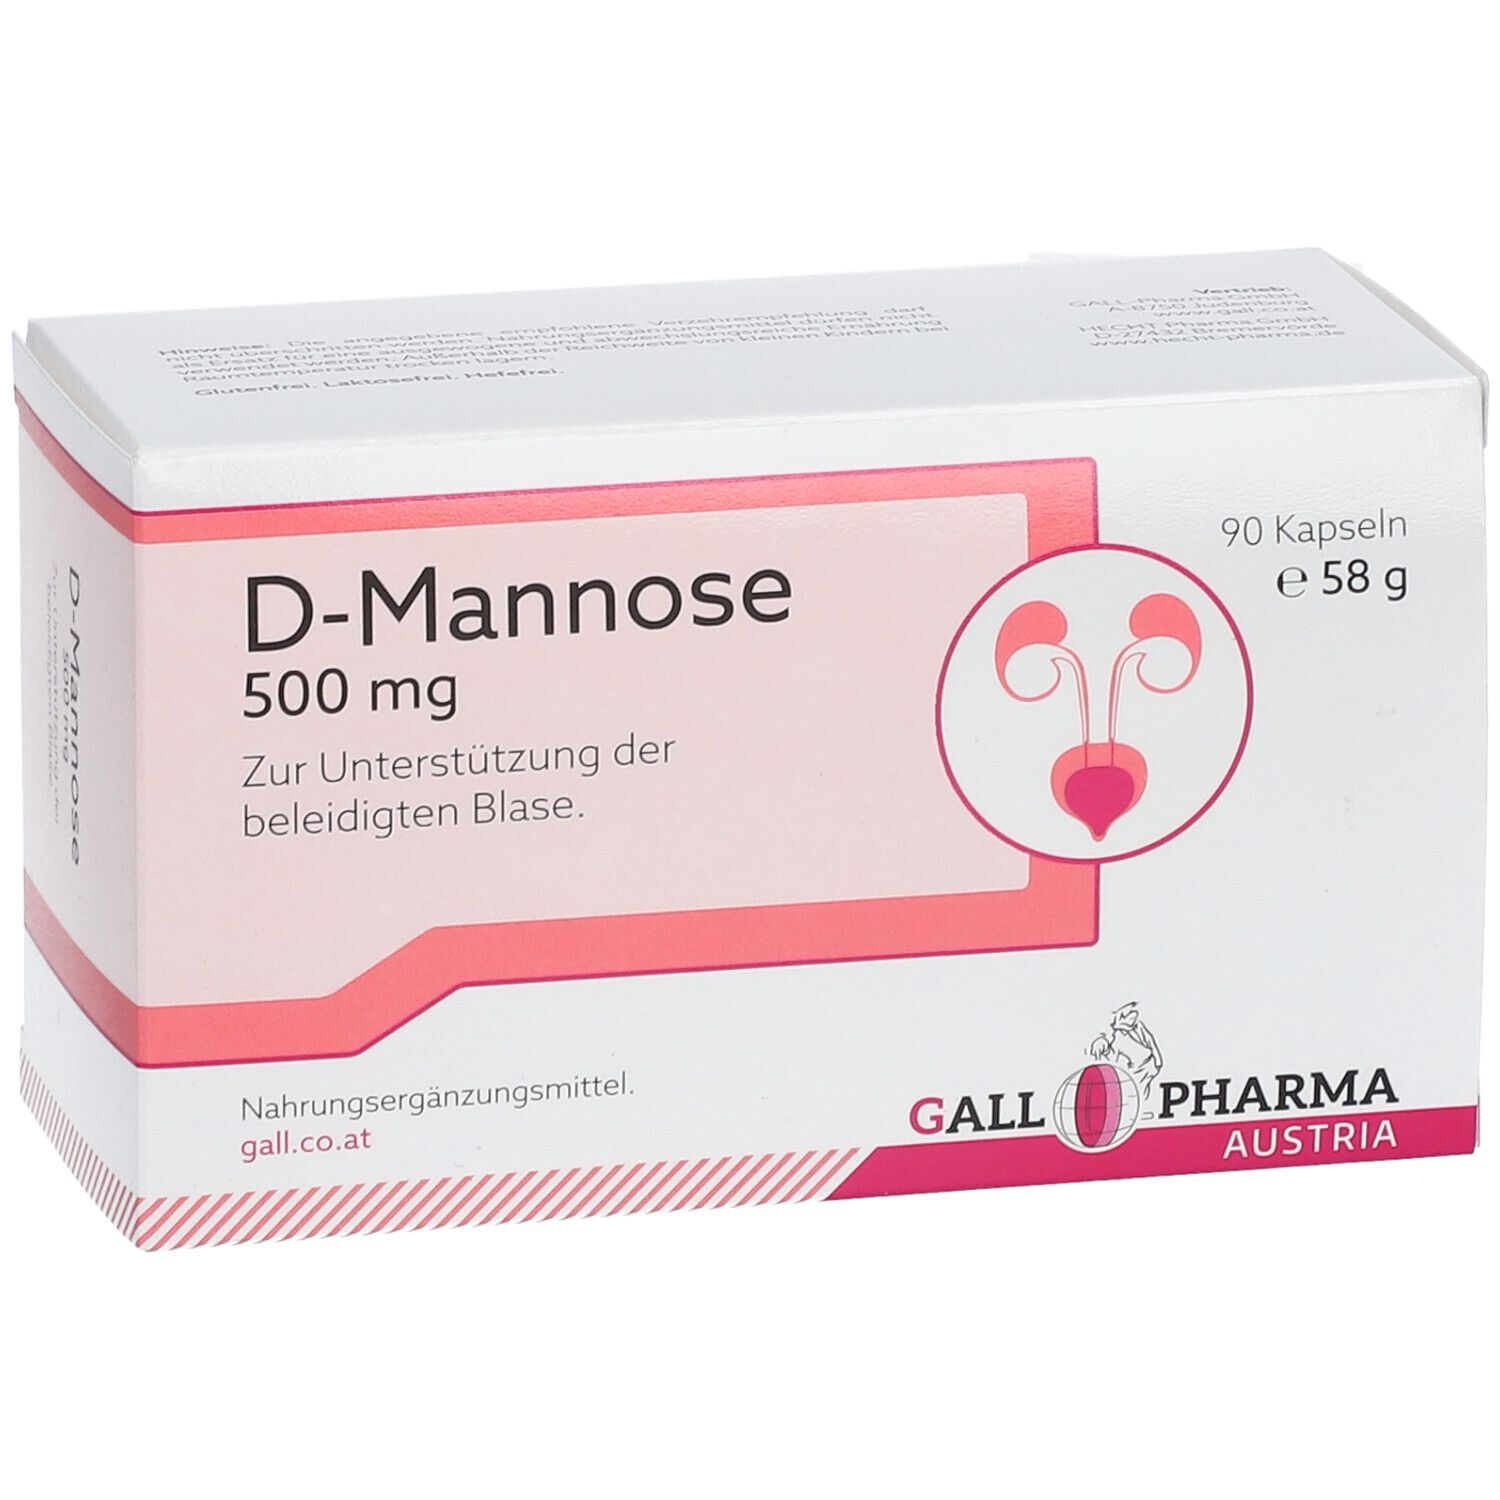 D-MANNOSE 500 mg GPH